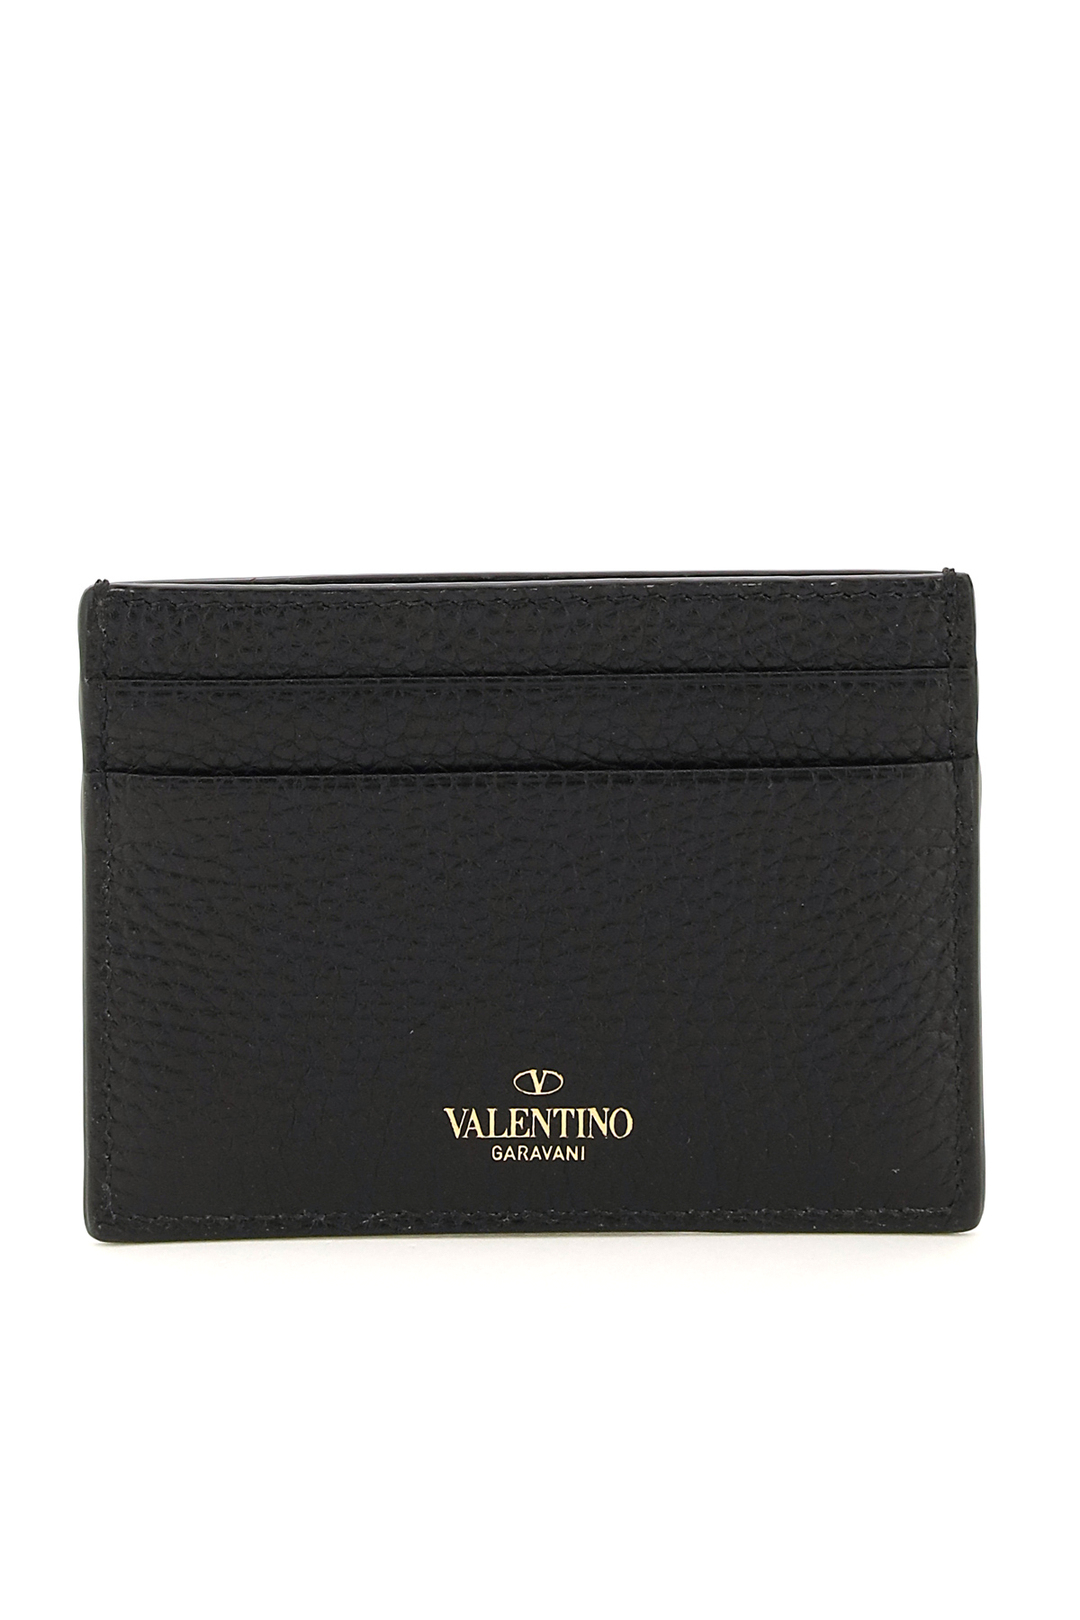 Valentino Garavani Rockstud Card Holder   Black